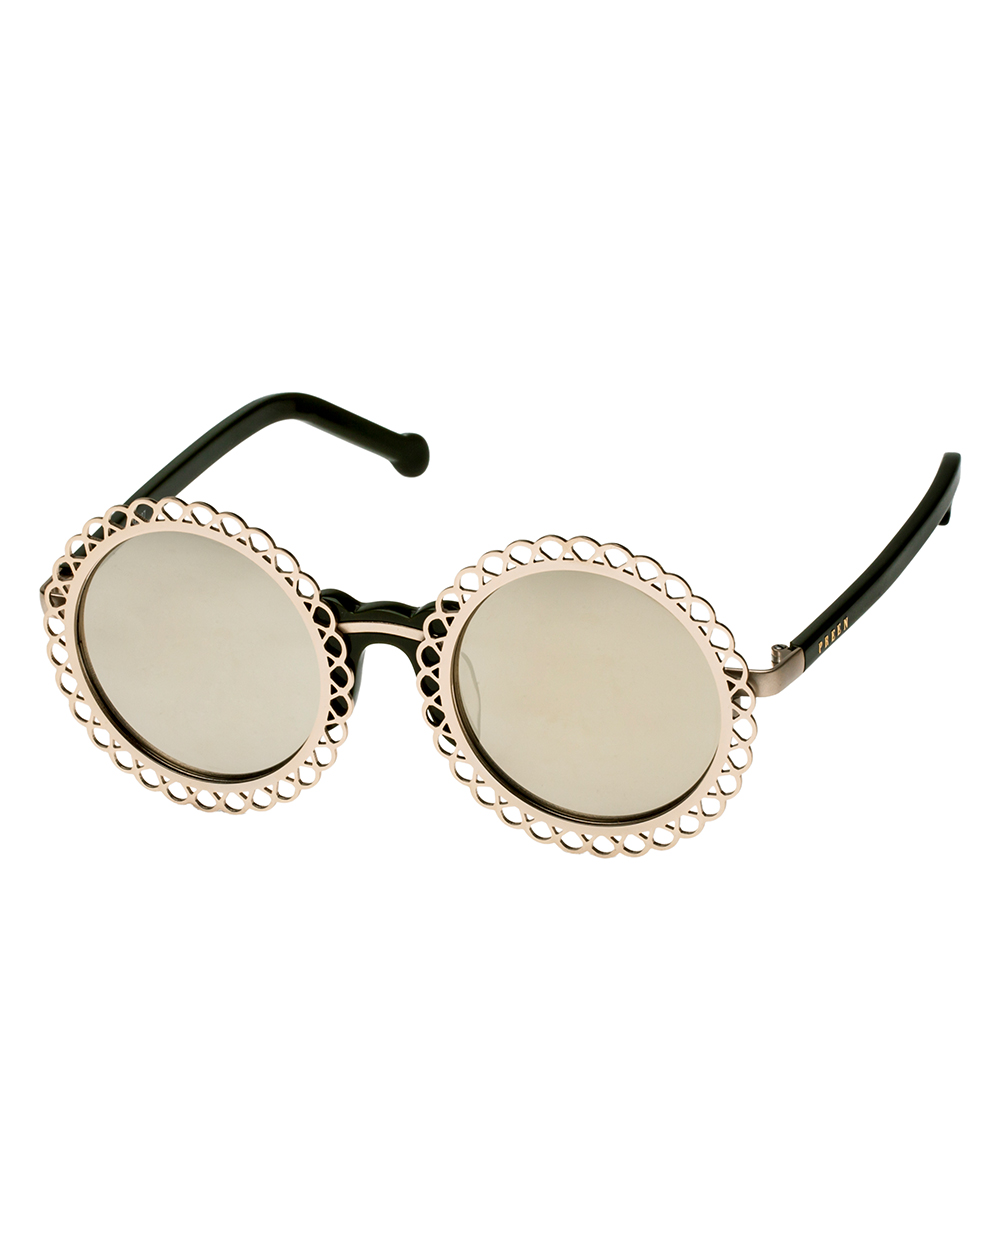 Preen by Thornton Bregazzi Chantilly sunglasses